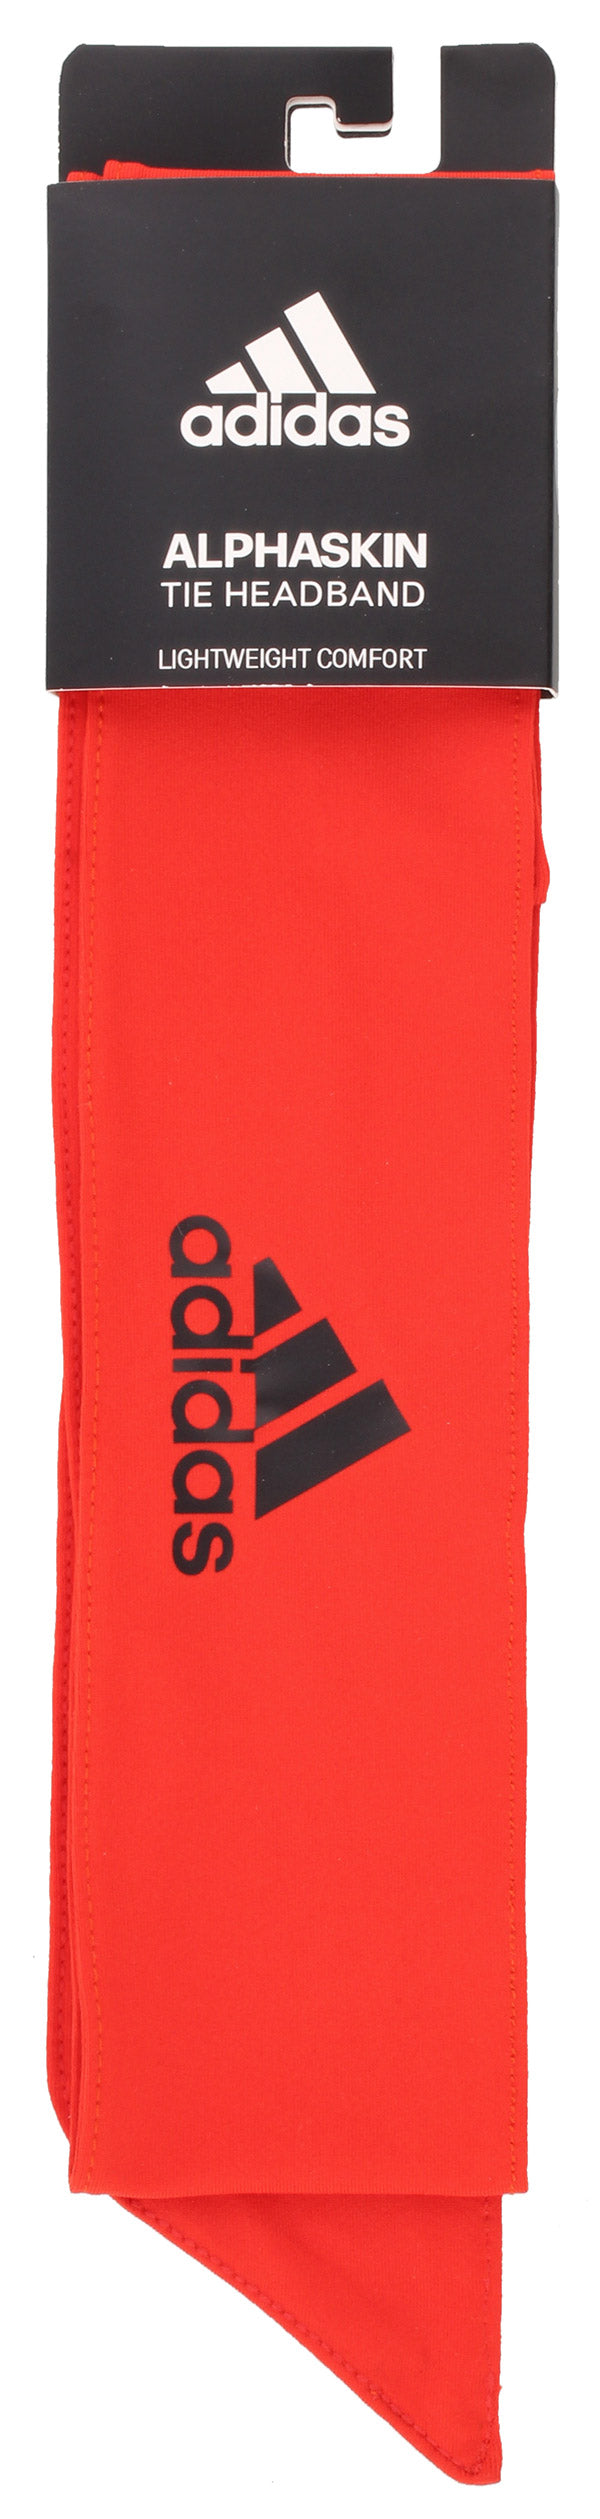 adidas Alphaskin Tie Headband (Red) vid-40142099316823